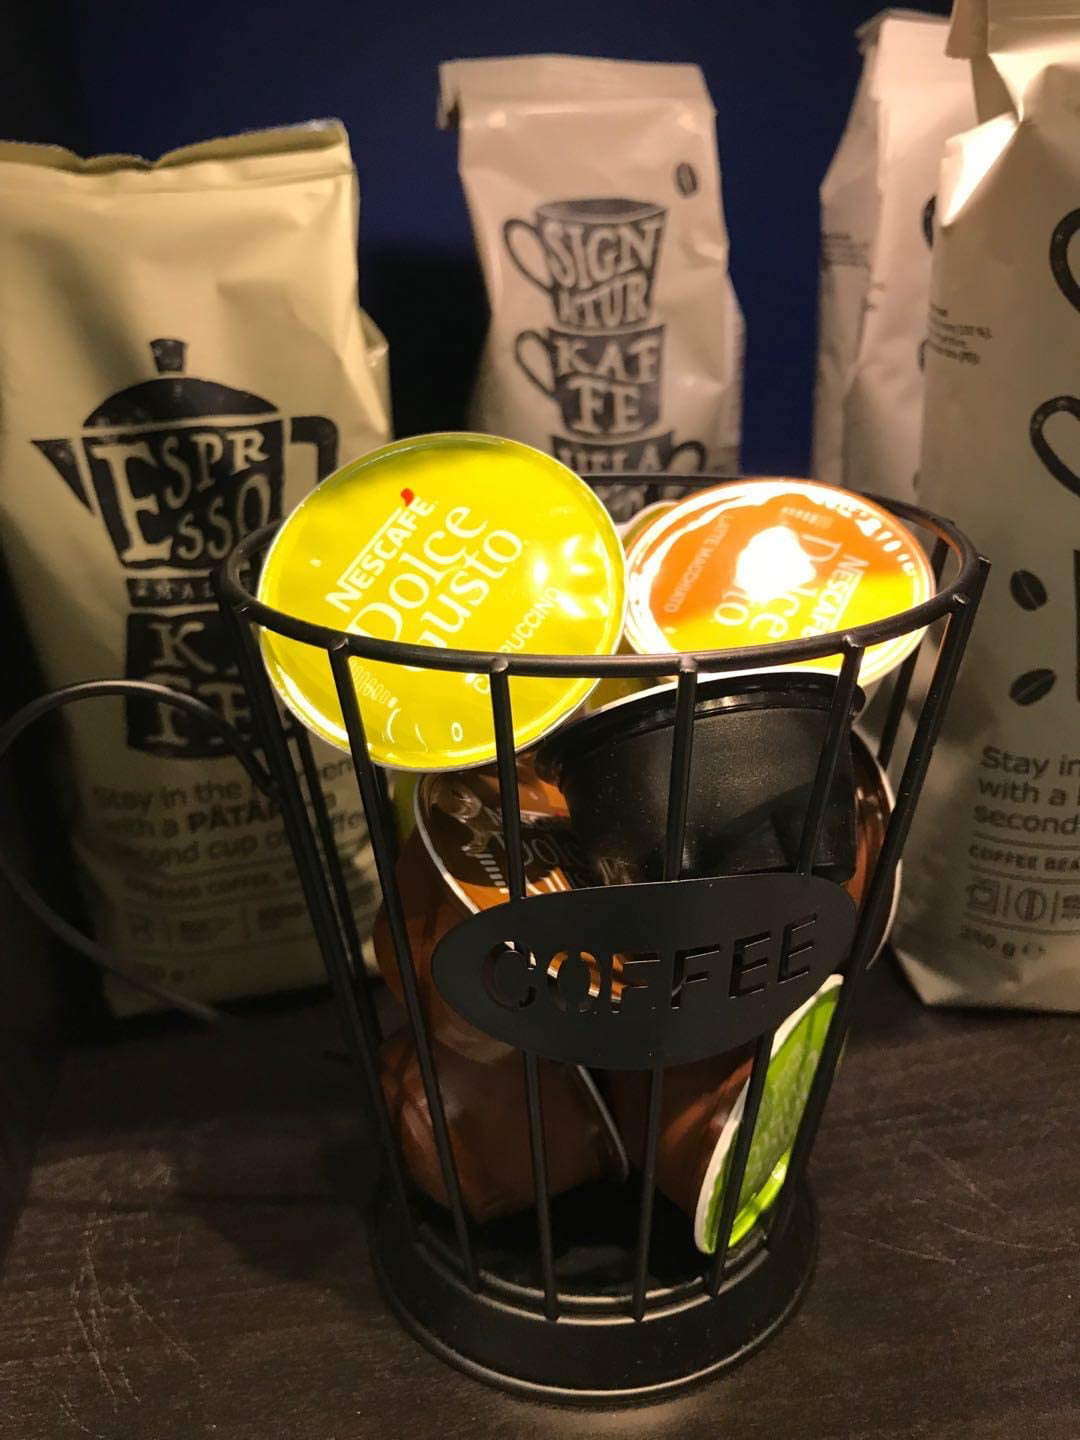 COFFEE K-CUP HOLDER Wrought Iron Mug Keurig Pod Storage Rack USA – Saving  Shepherd